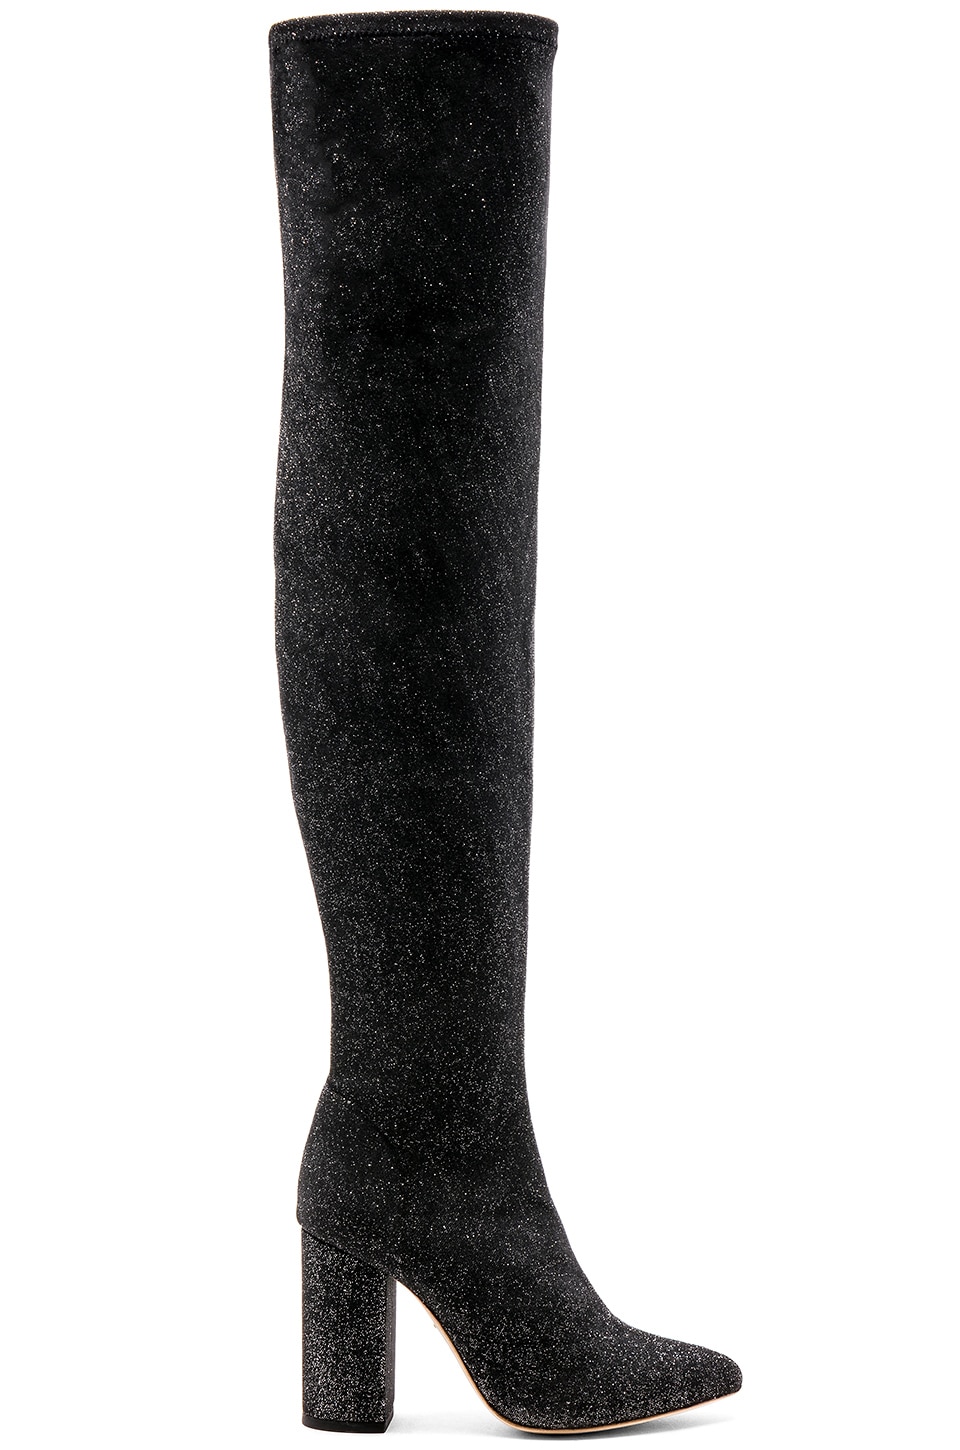 black glitter knee high boots